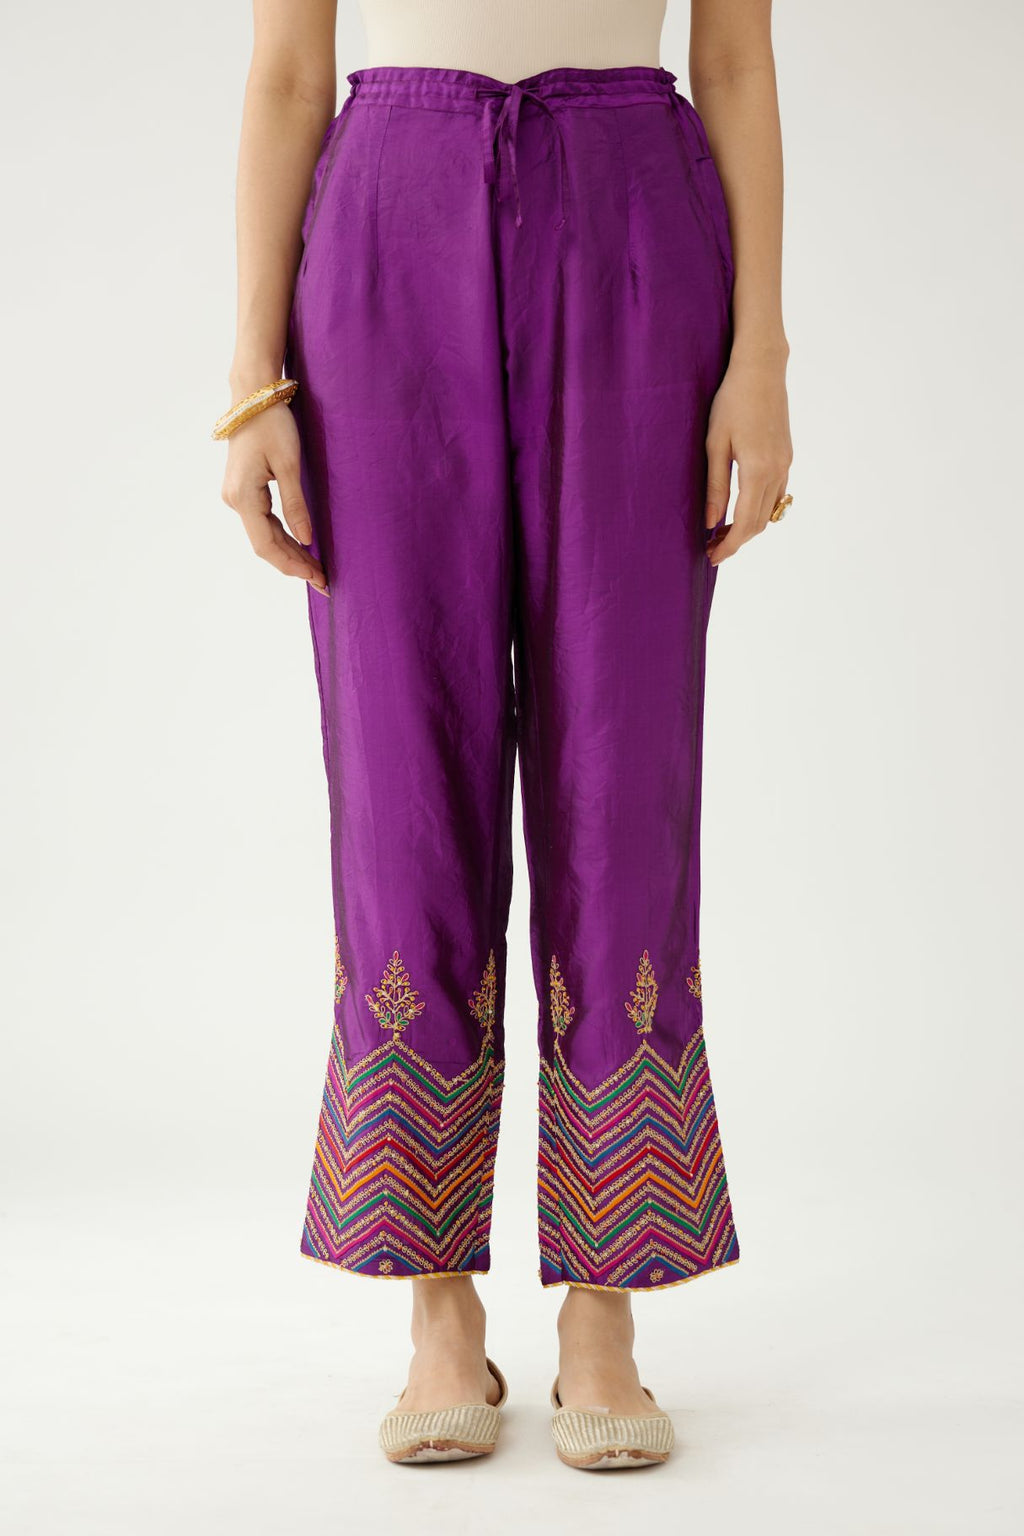 Plum purple silk pants detailed with dori, silk thread, bead & sequins embroidery.